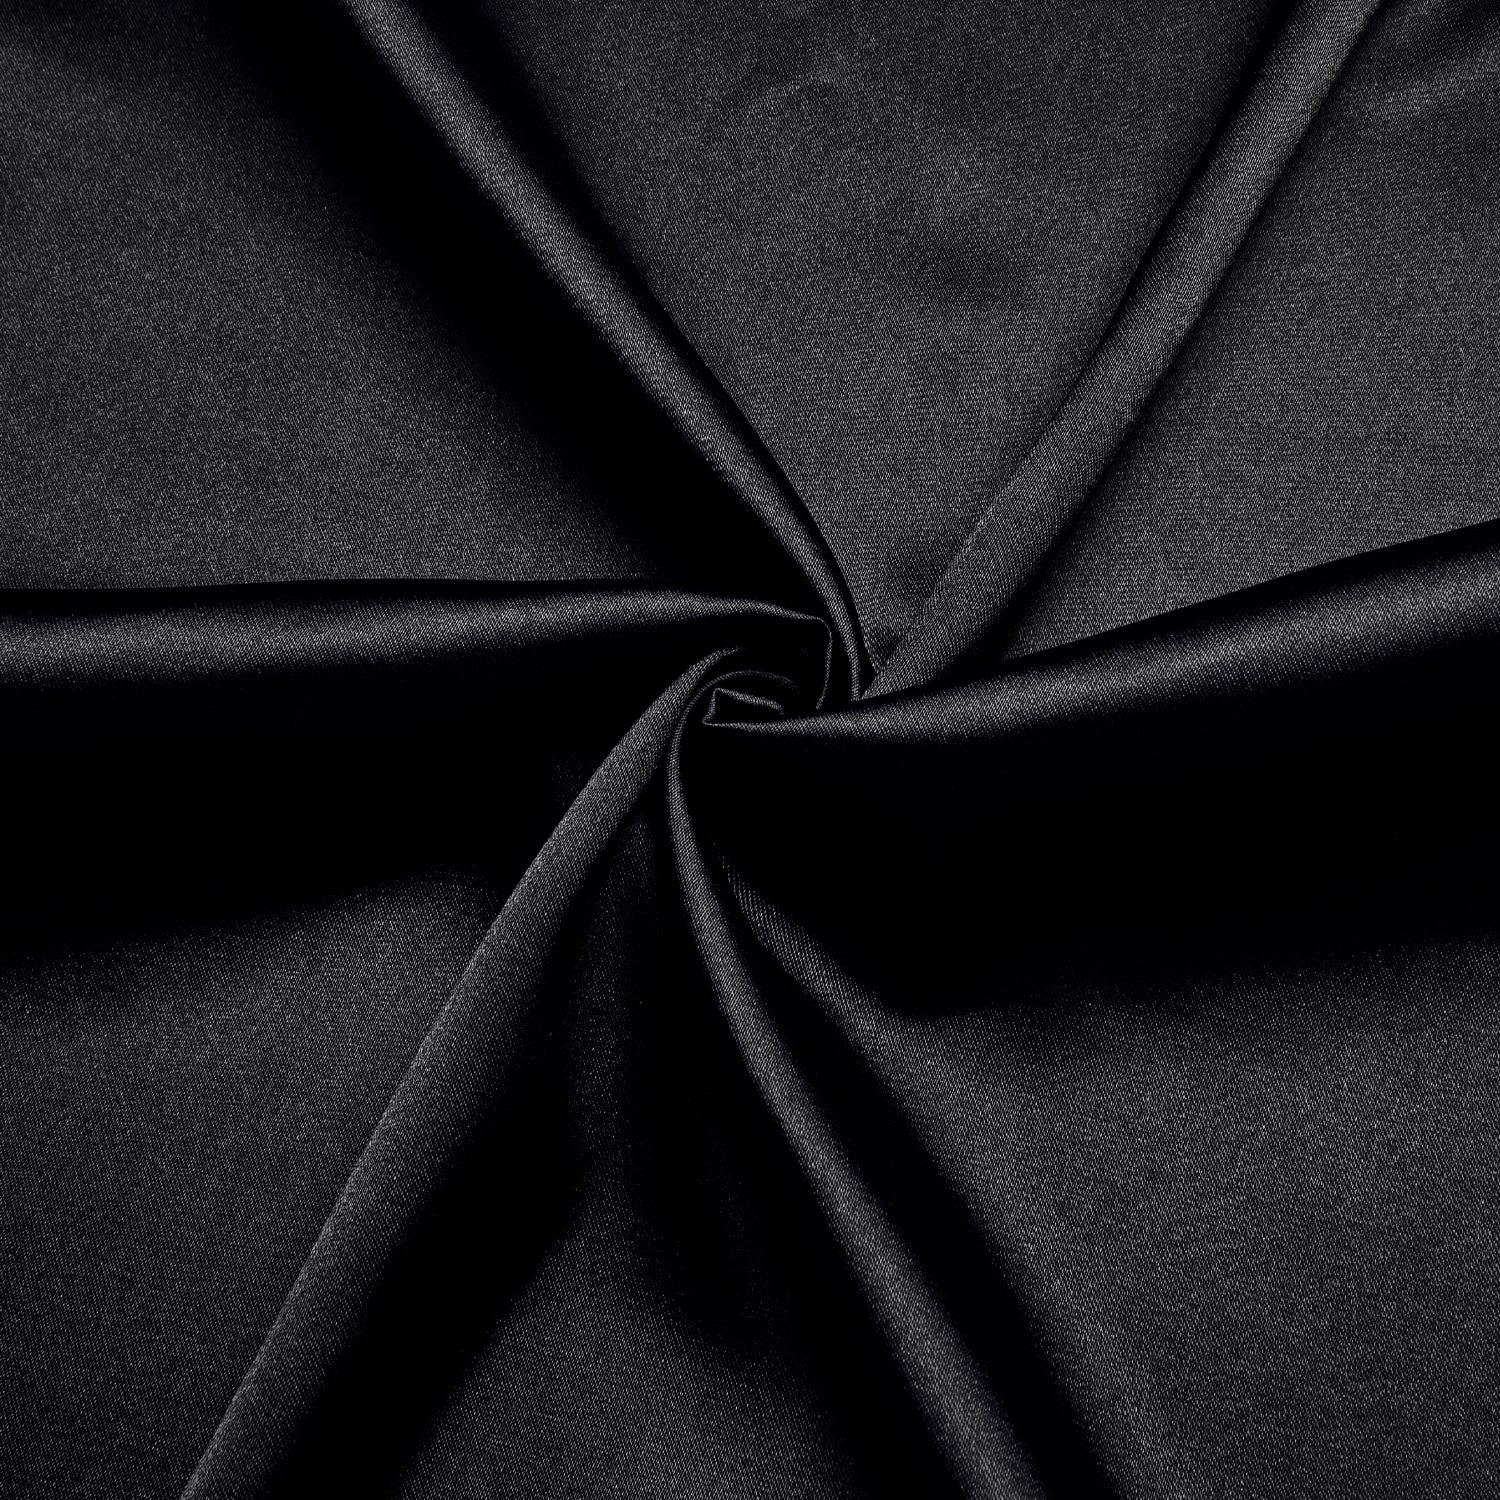 New Pure Black Solid Satin Men's Short Sleeve Shirt